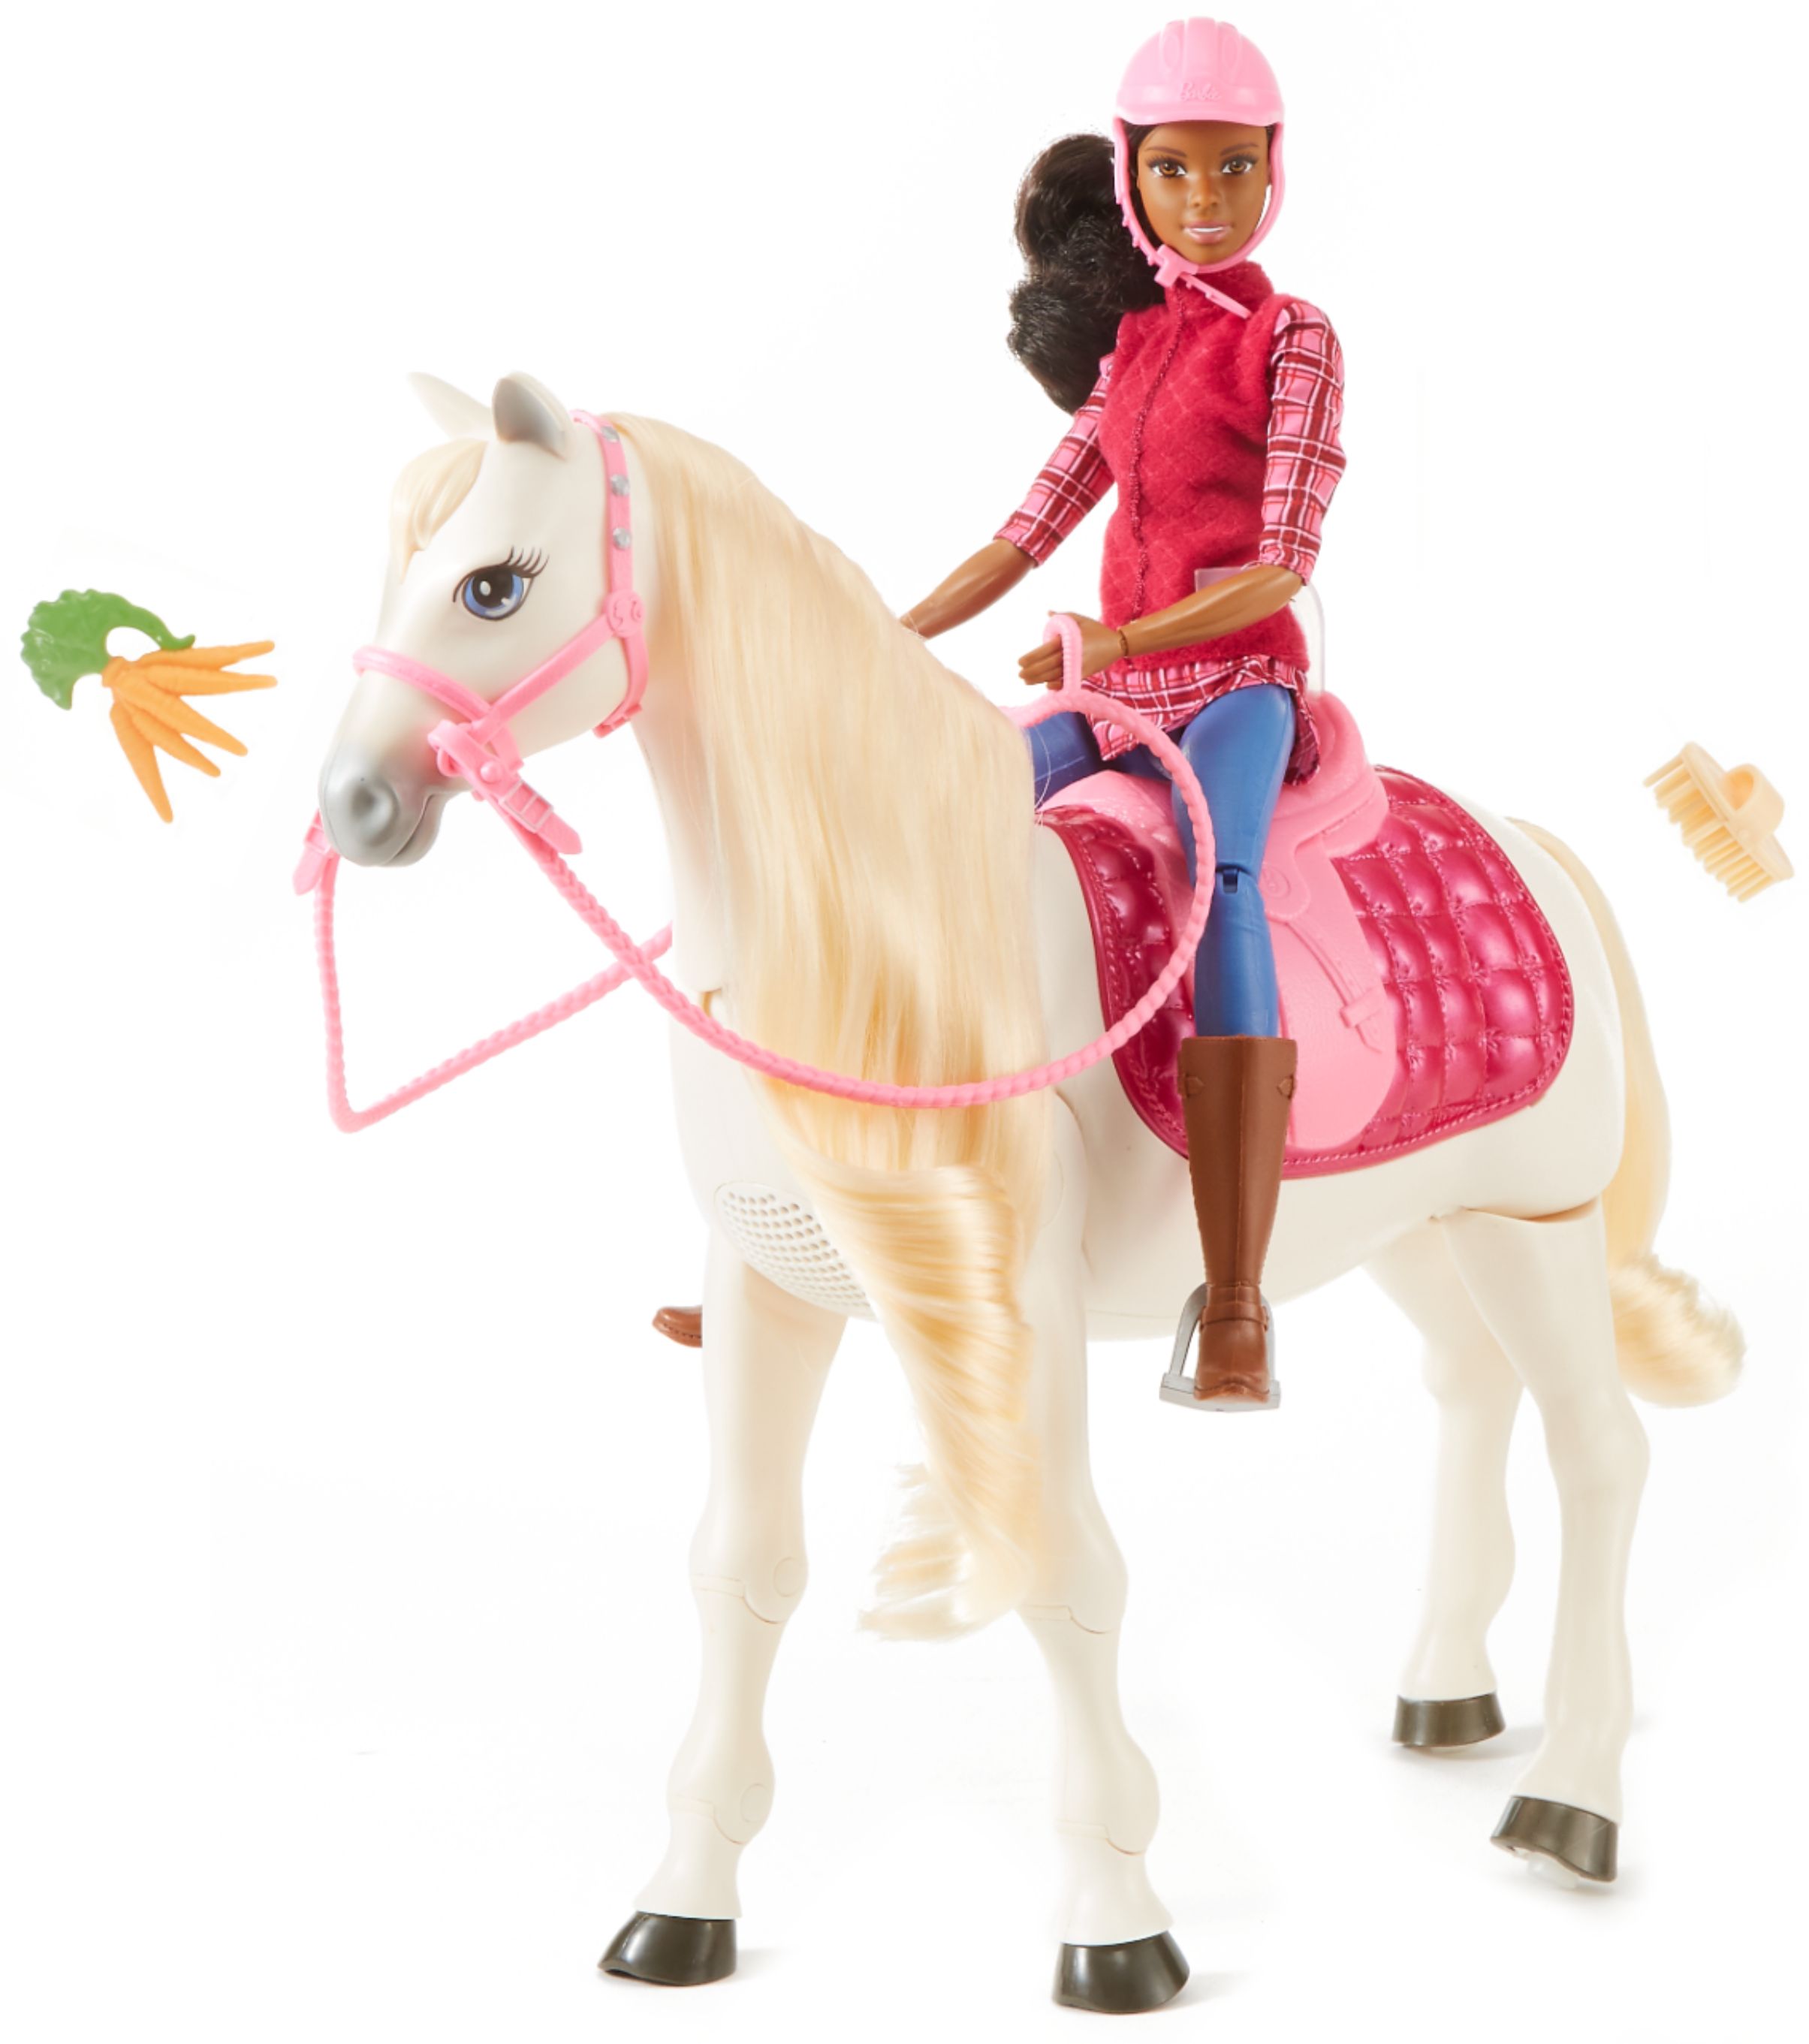 barbie dreamhorse